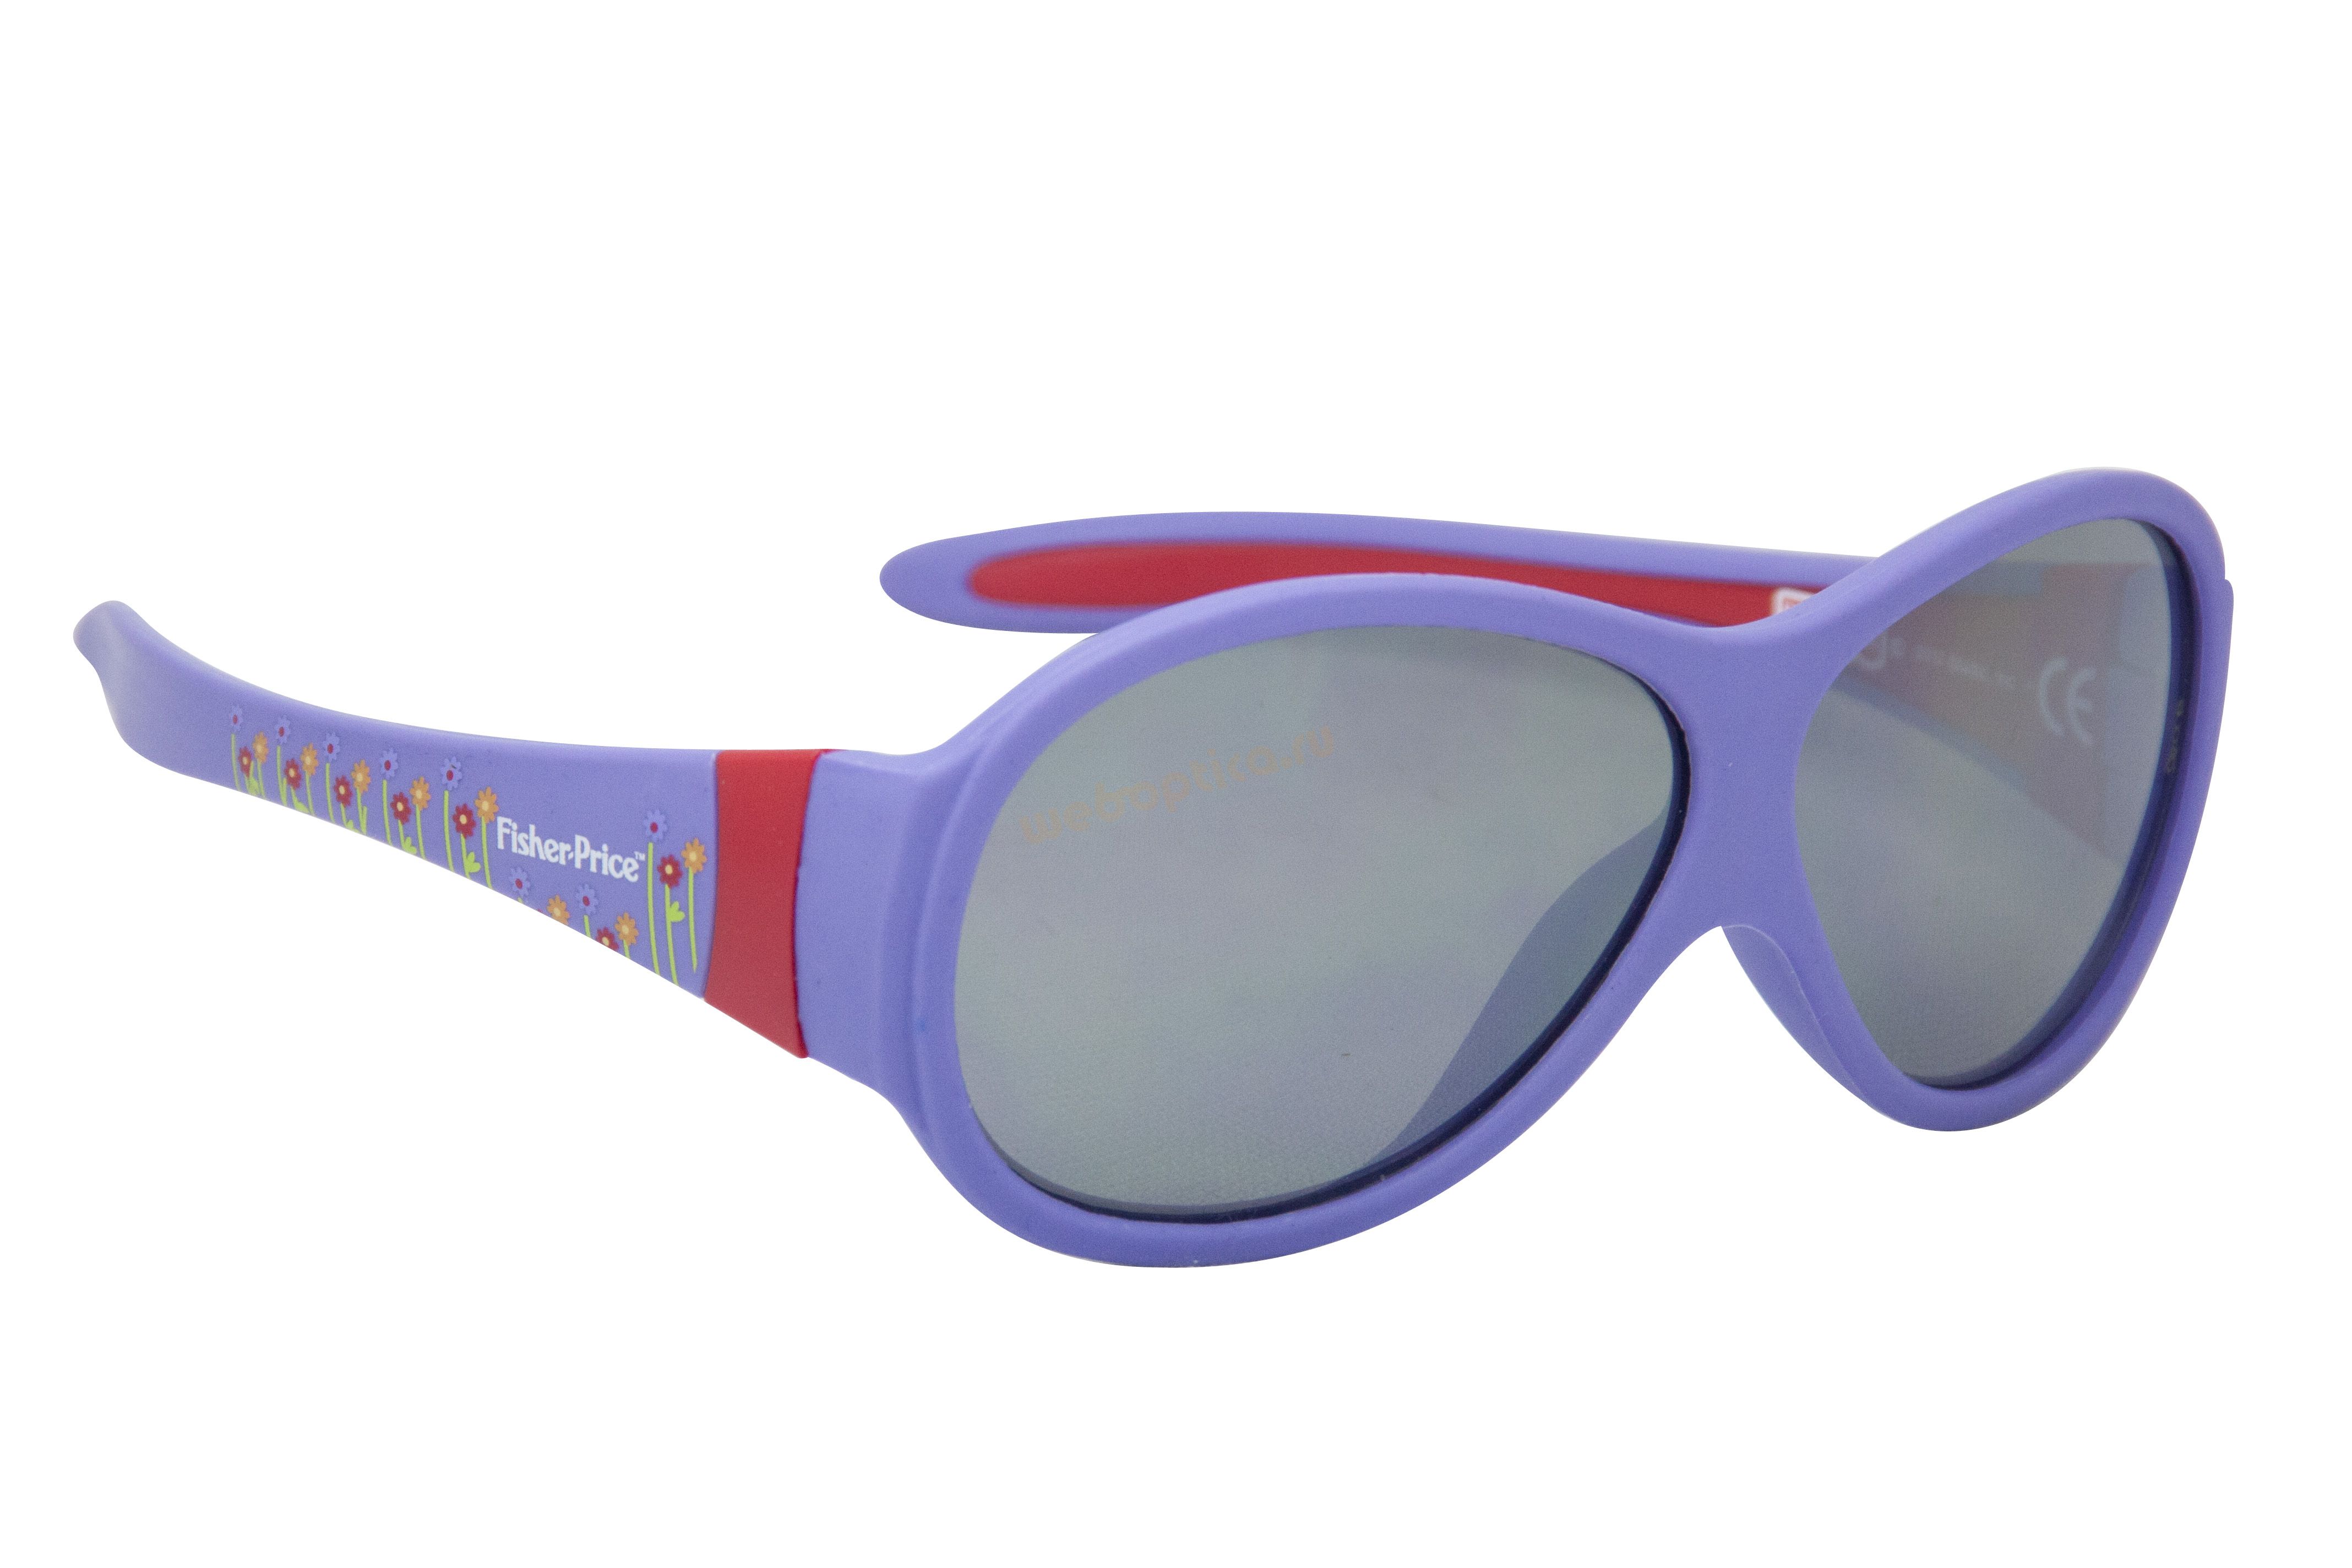 Cолнцезащитные очки FISHER PRICE FIPS48 530 купить